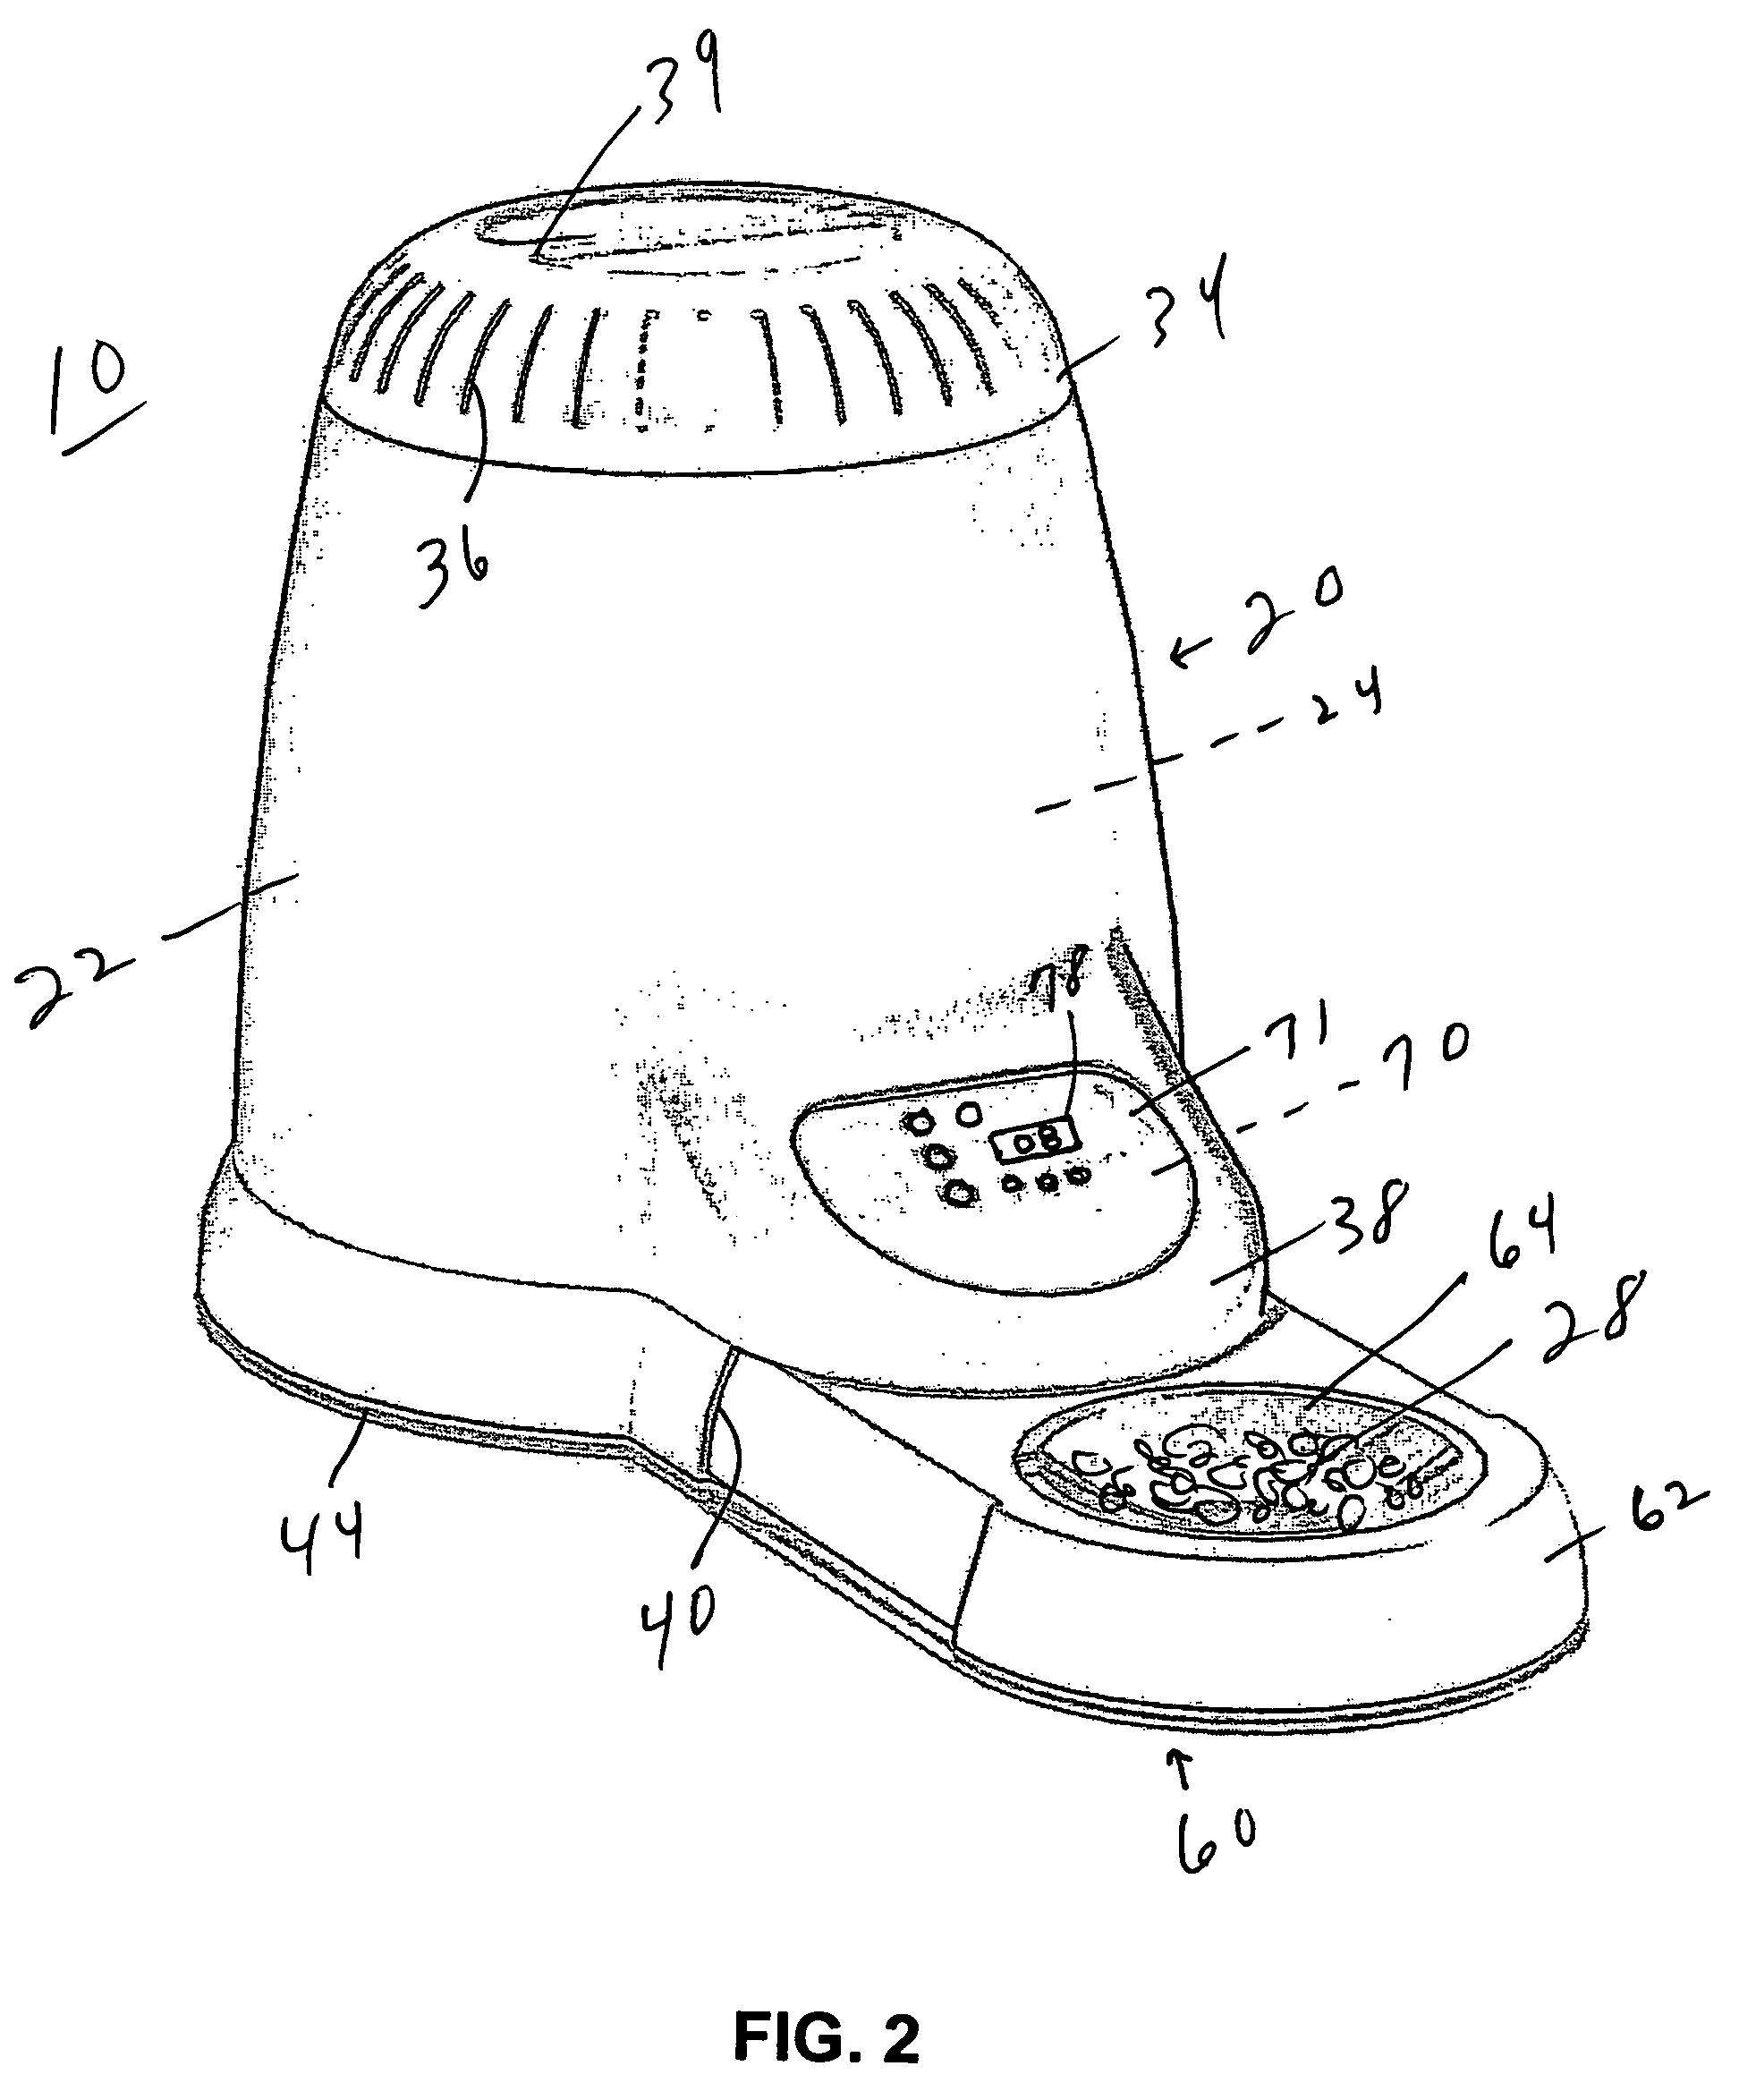 Animal feeding device and method